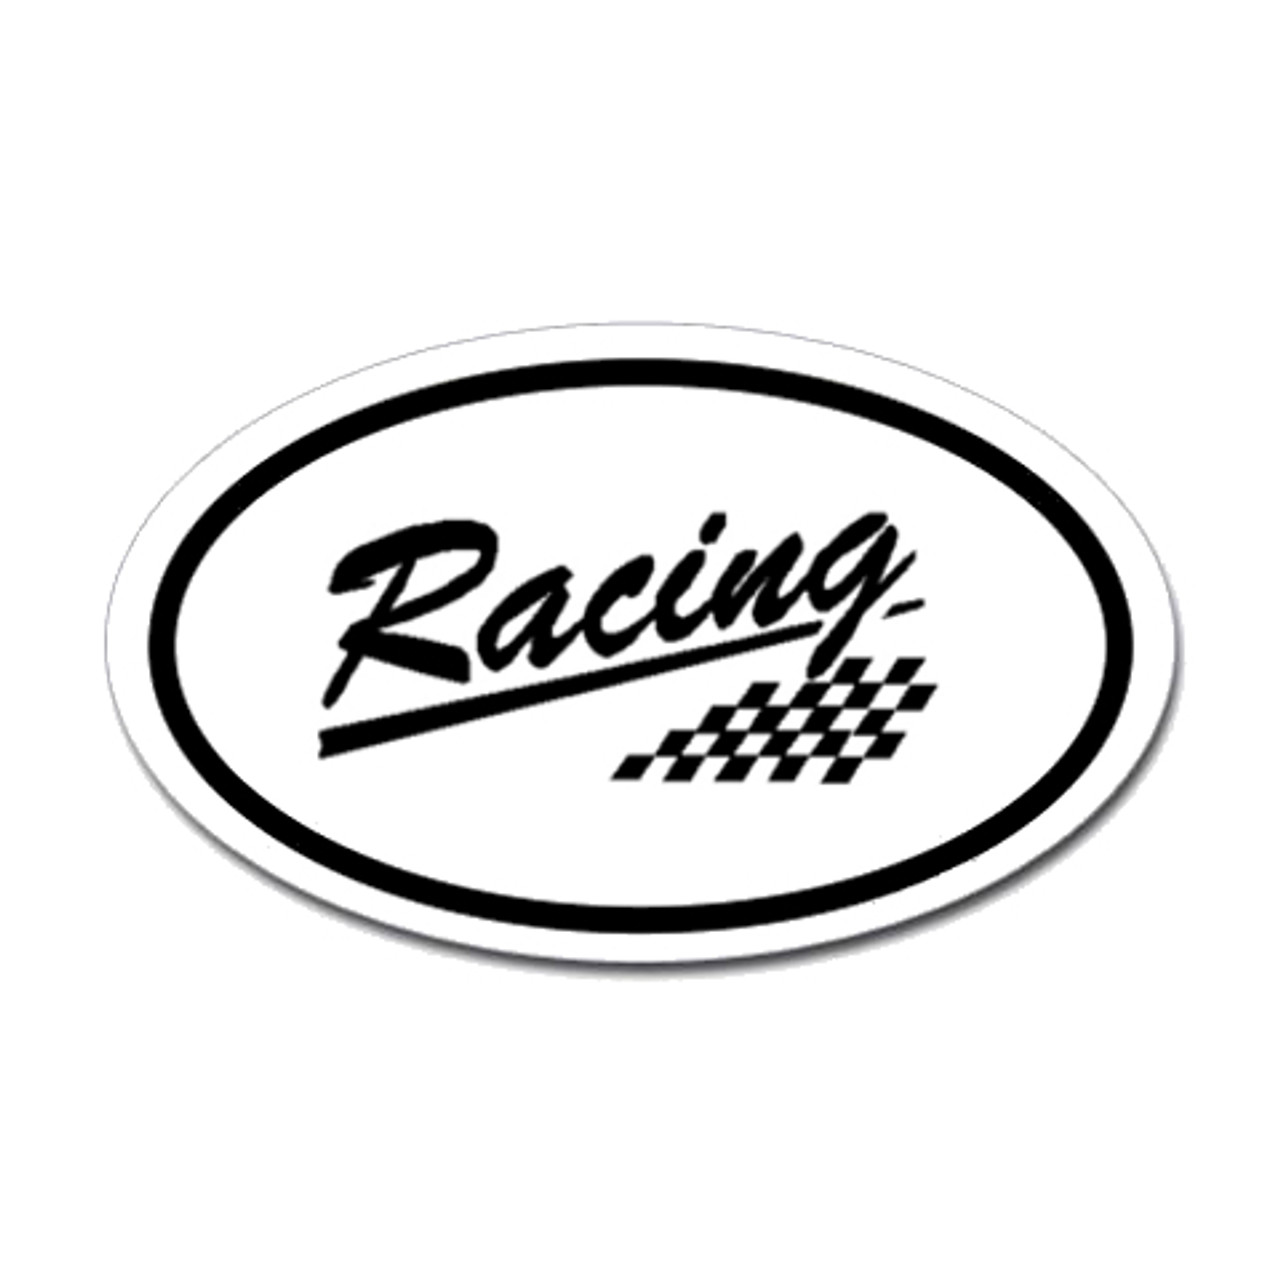 Racing Oval Sticker